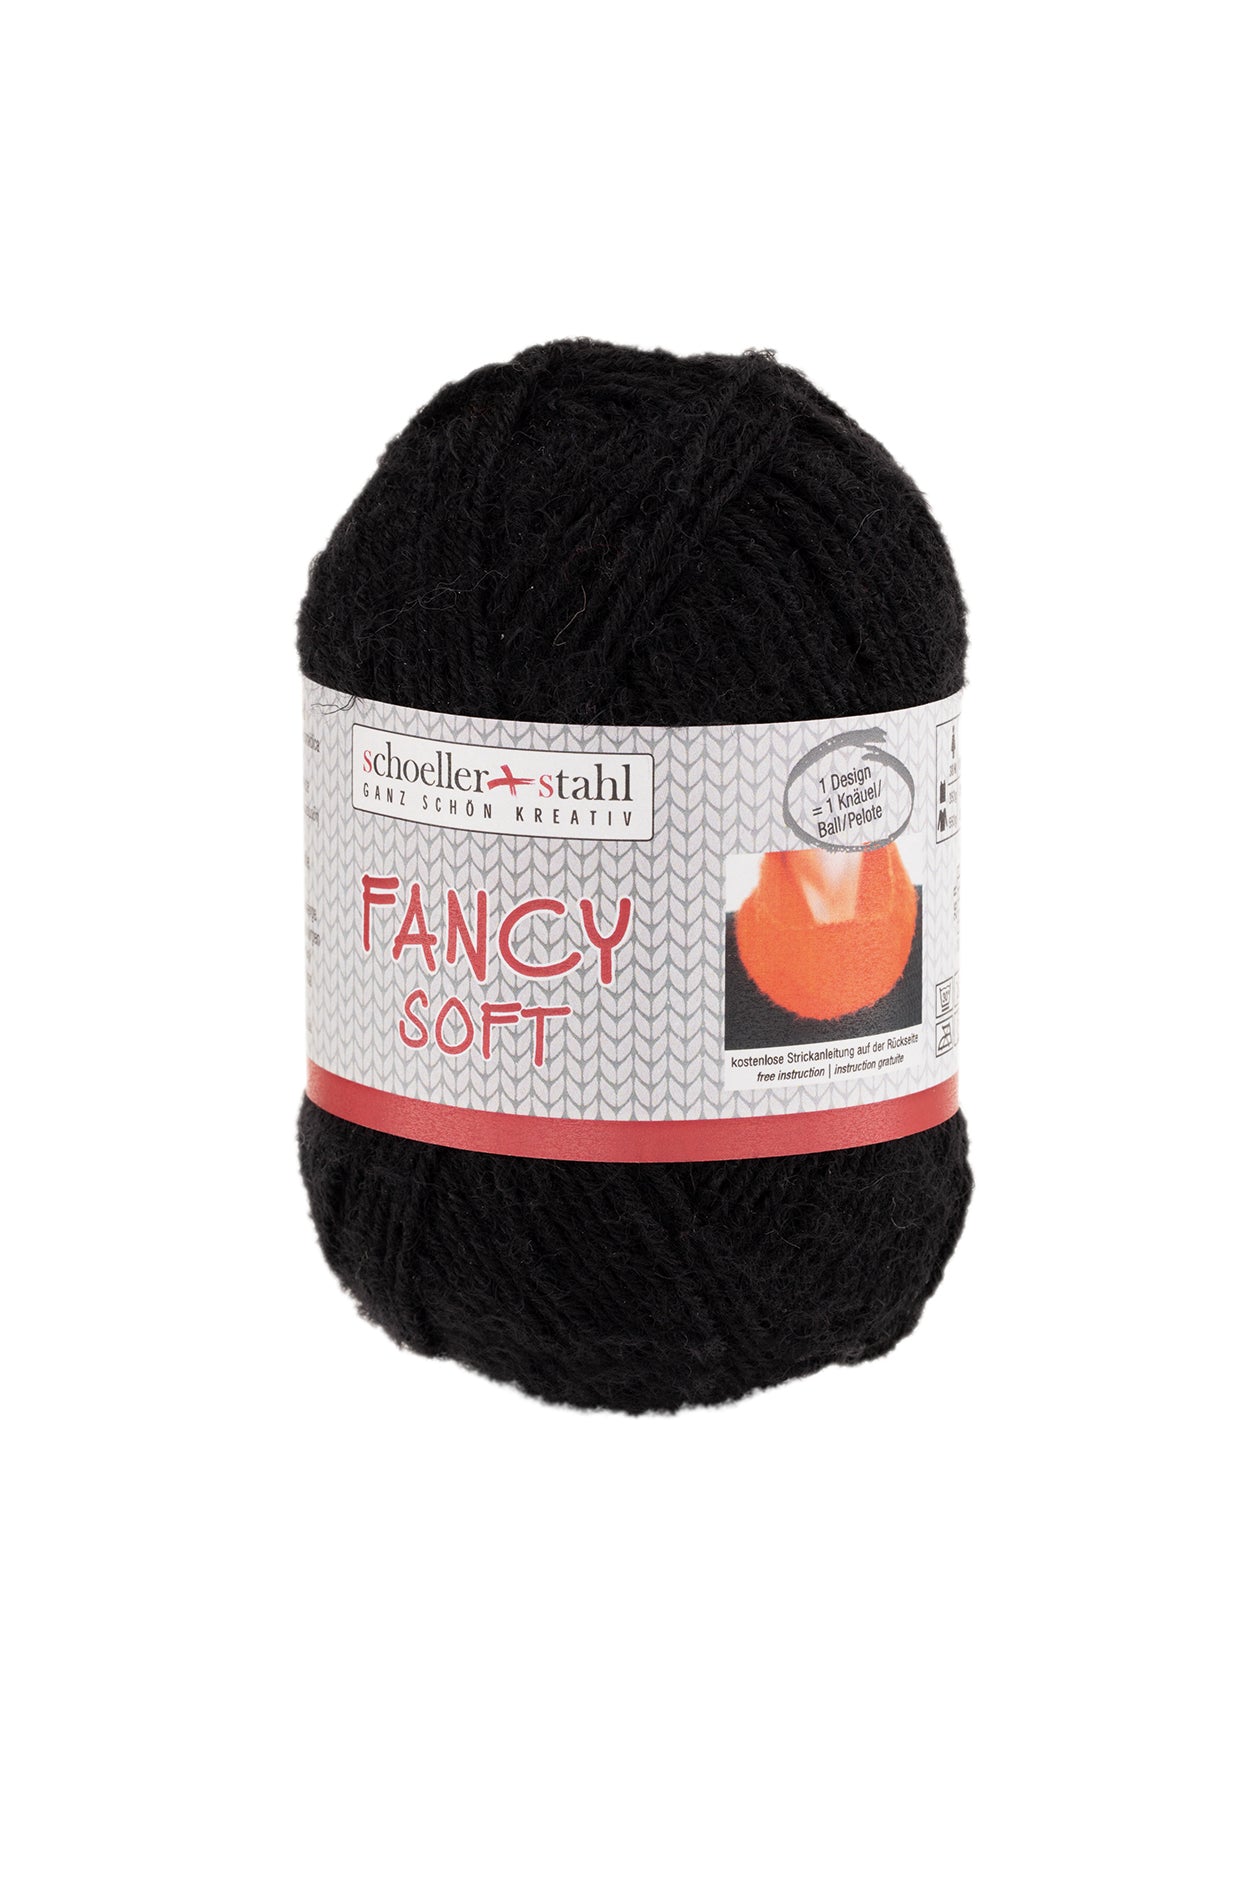 Fancy Soft  50g, 90233, Farbe 5, schwarz